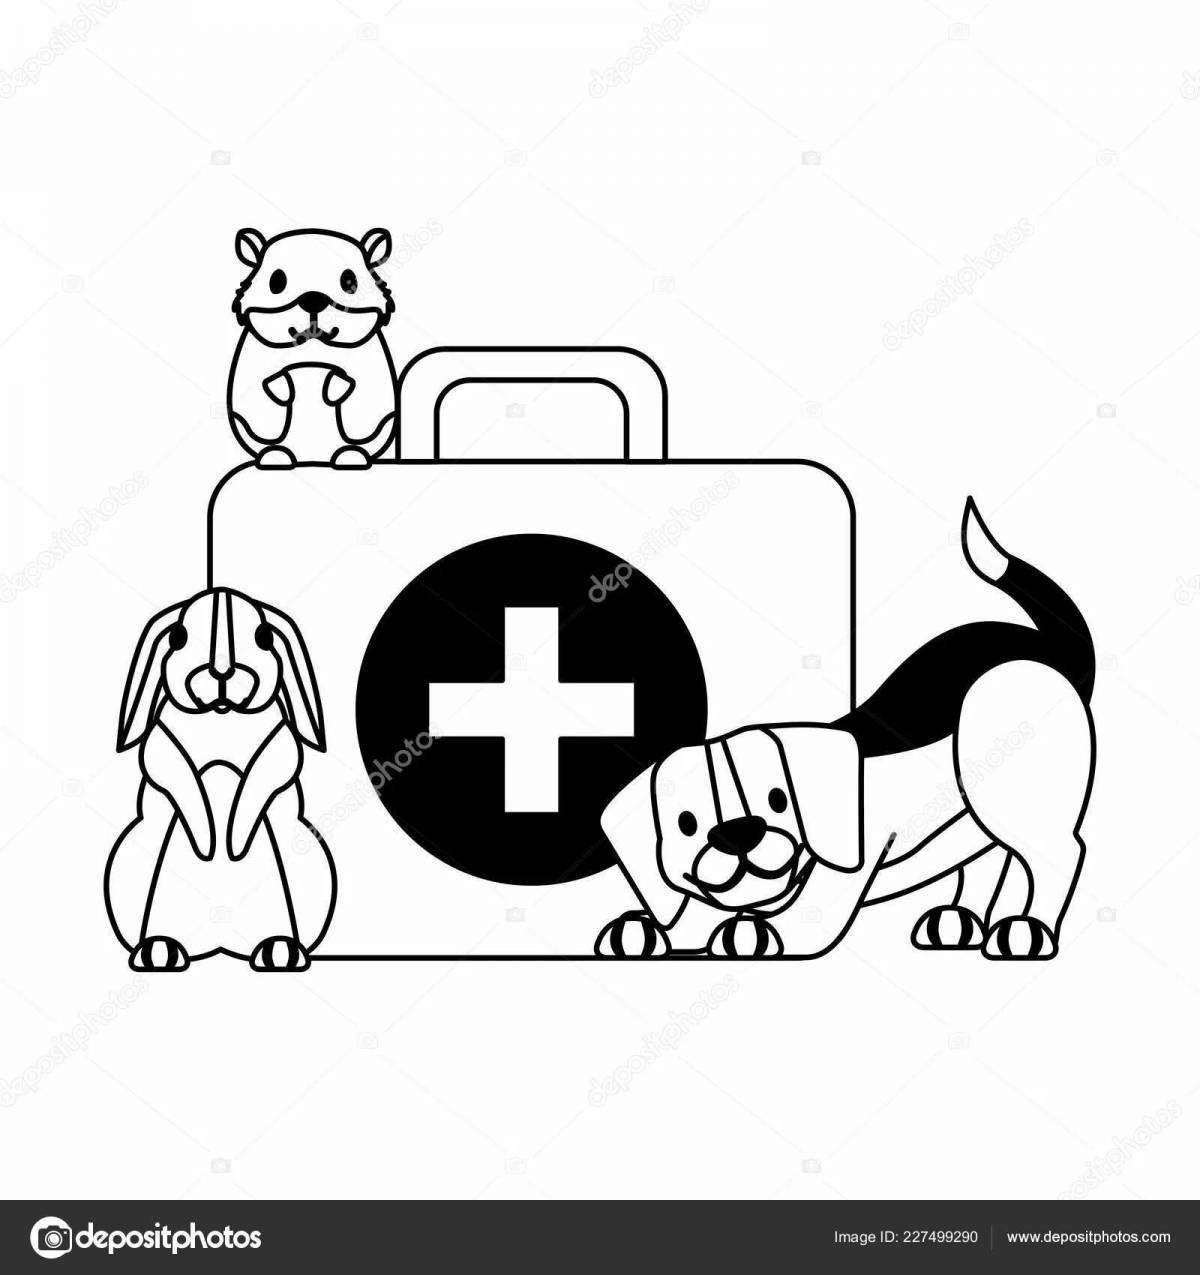 Playful animal veterinarian